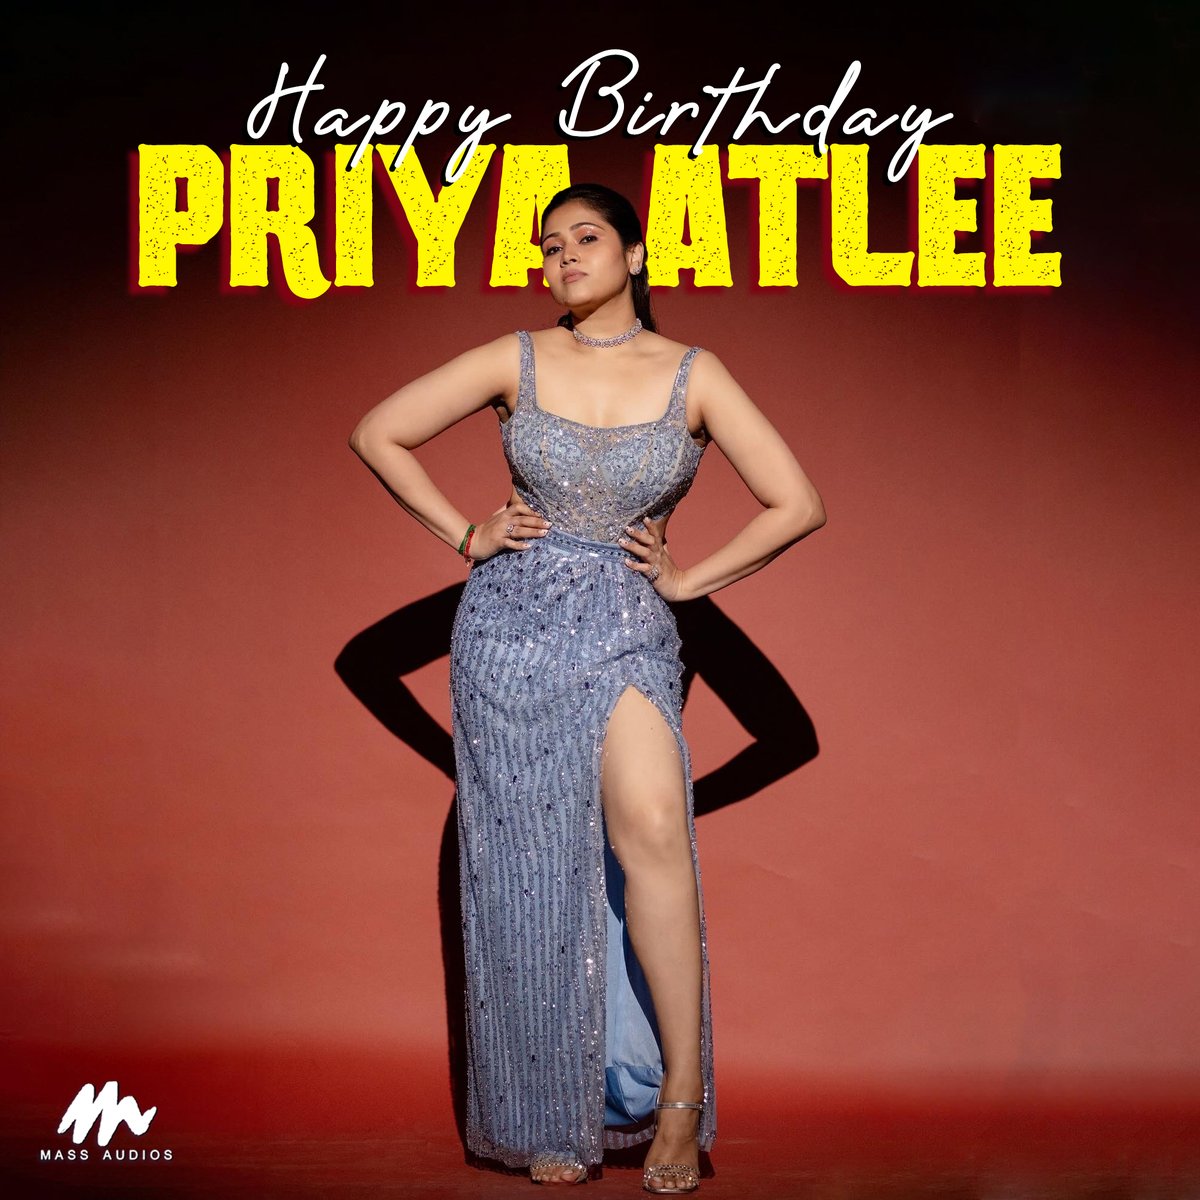 Wishing #PriyaAtlee A Very Happy Birthday #happybirthdayPriyaAtlee #hbdPriyaAtlee #massaudios